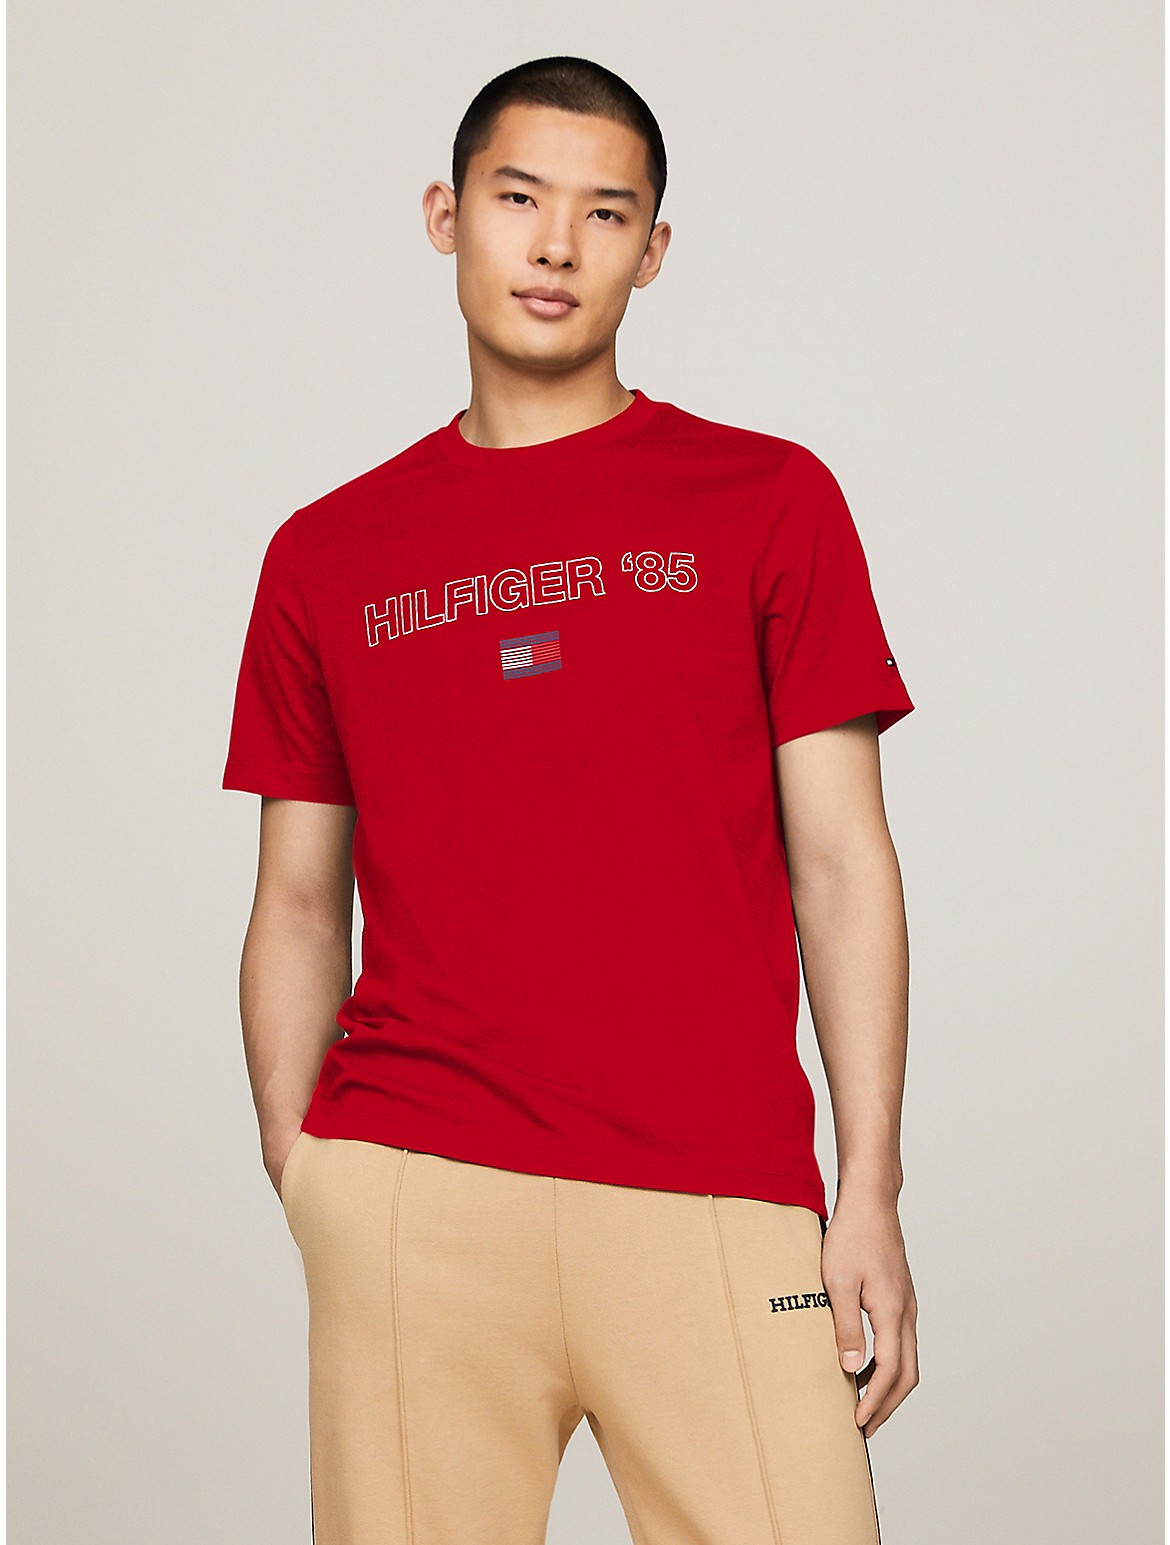 Tommy Hilfiger Men's Hilfiger '85 Graphic T-Shirt